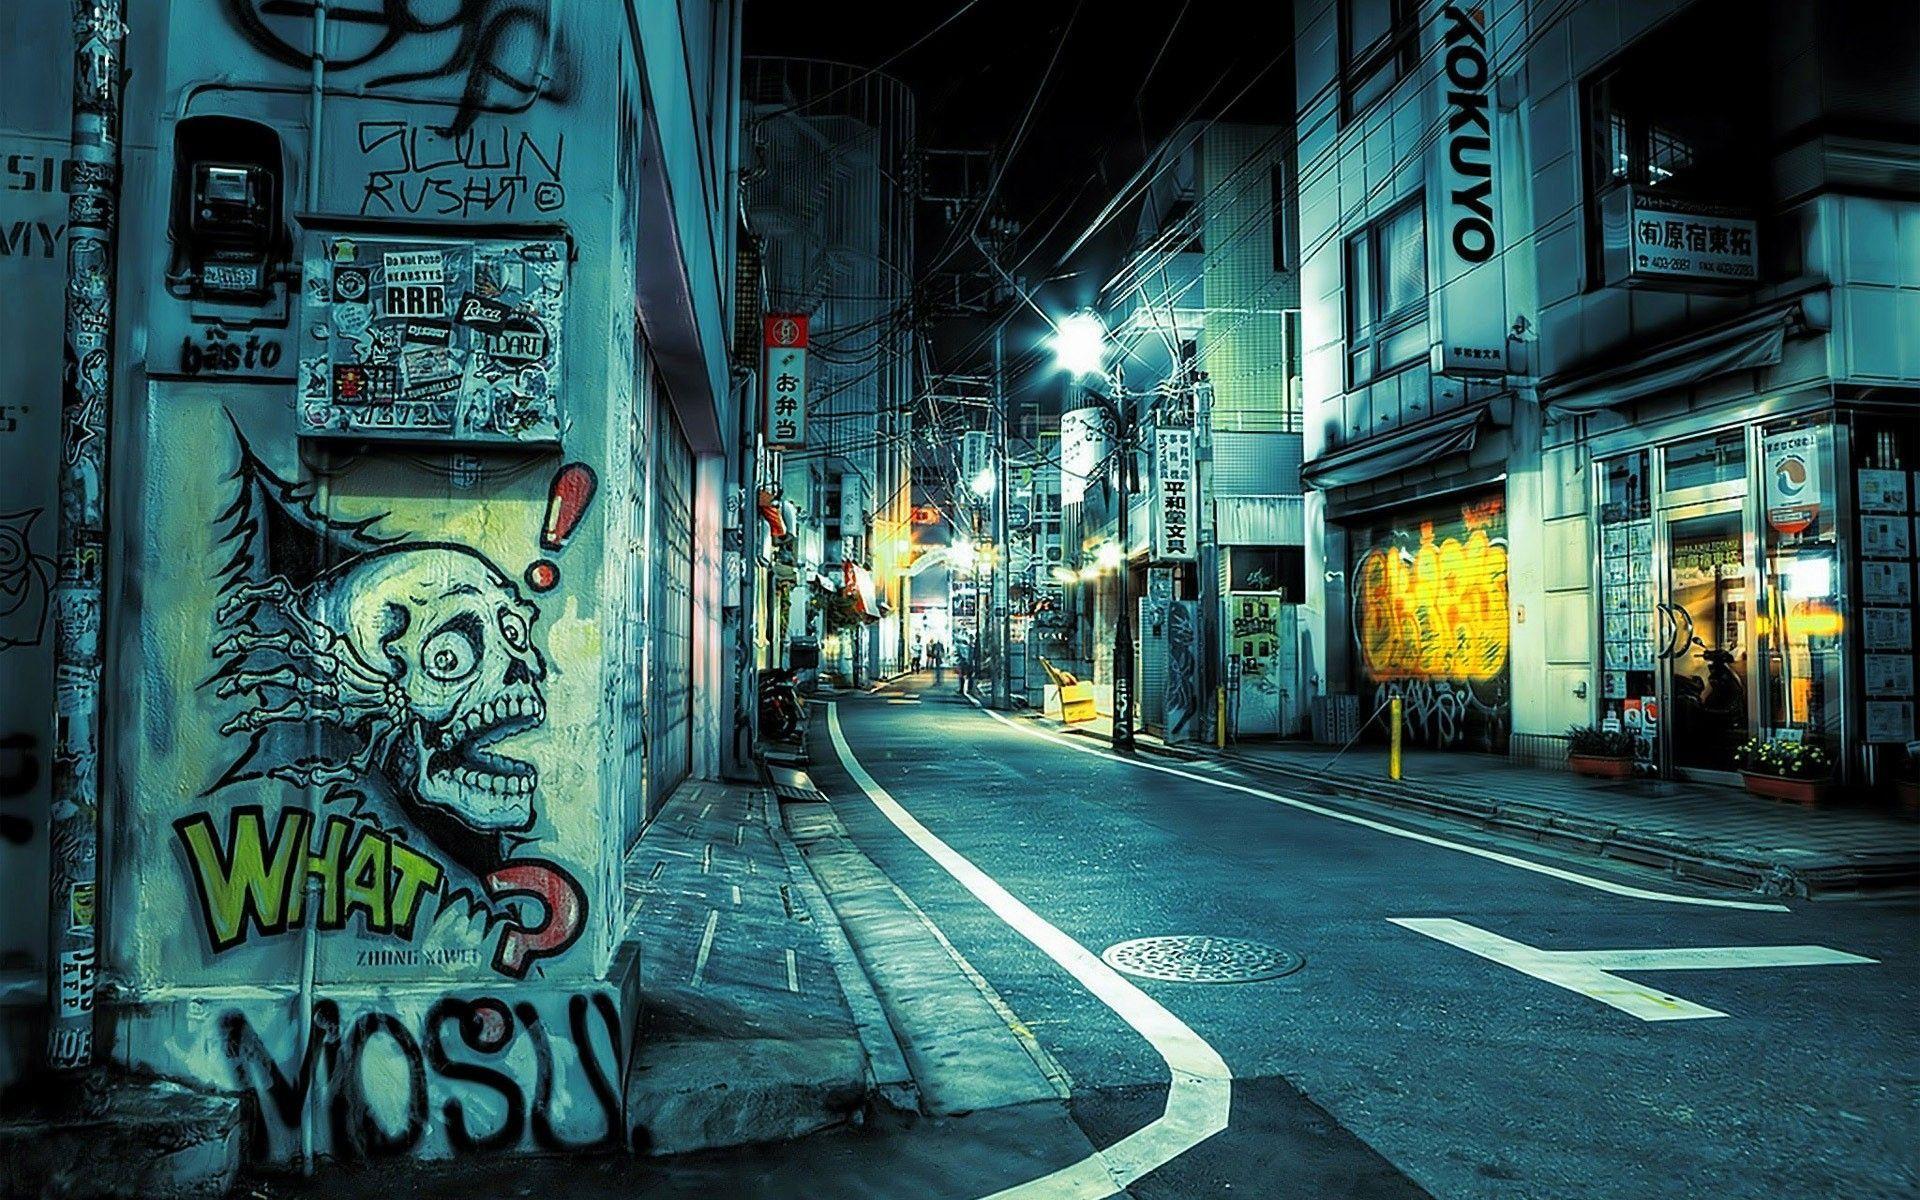 Tokyo Night - Other & Anime Background Wallpapers on Desktop Nexus (Image  2186370)